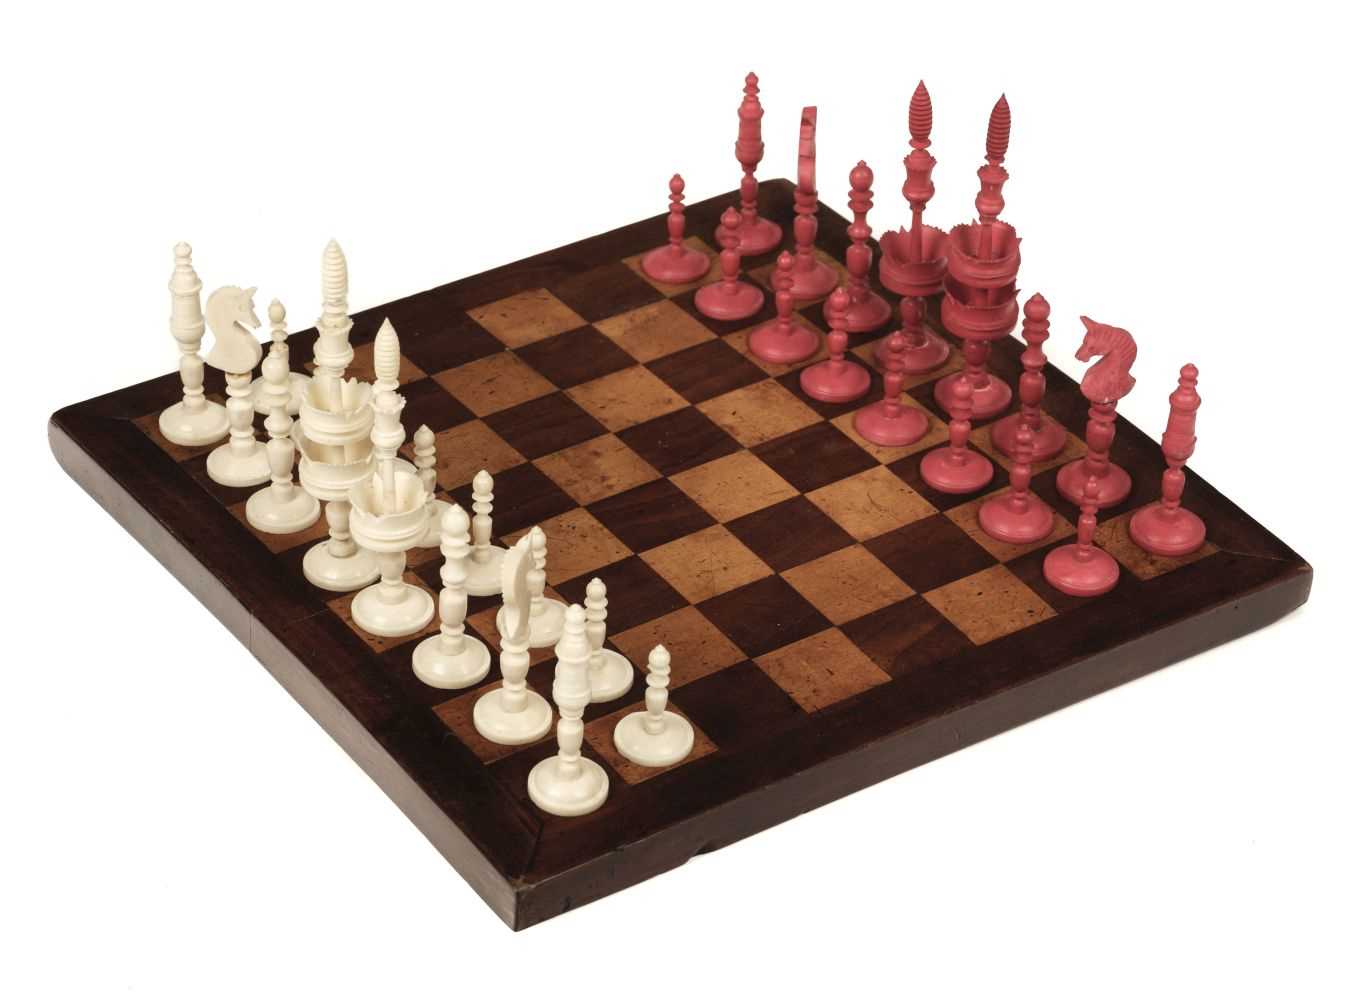 Lot 249 - Chess. A 19th-century ivory "Selenus" travelling chess set